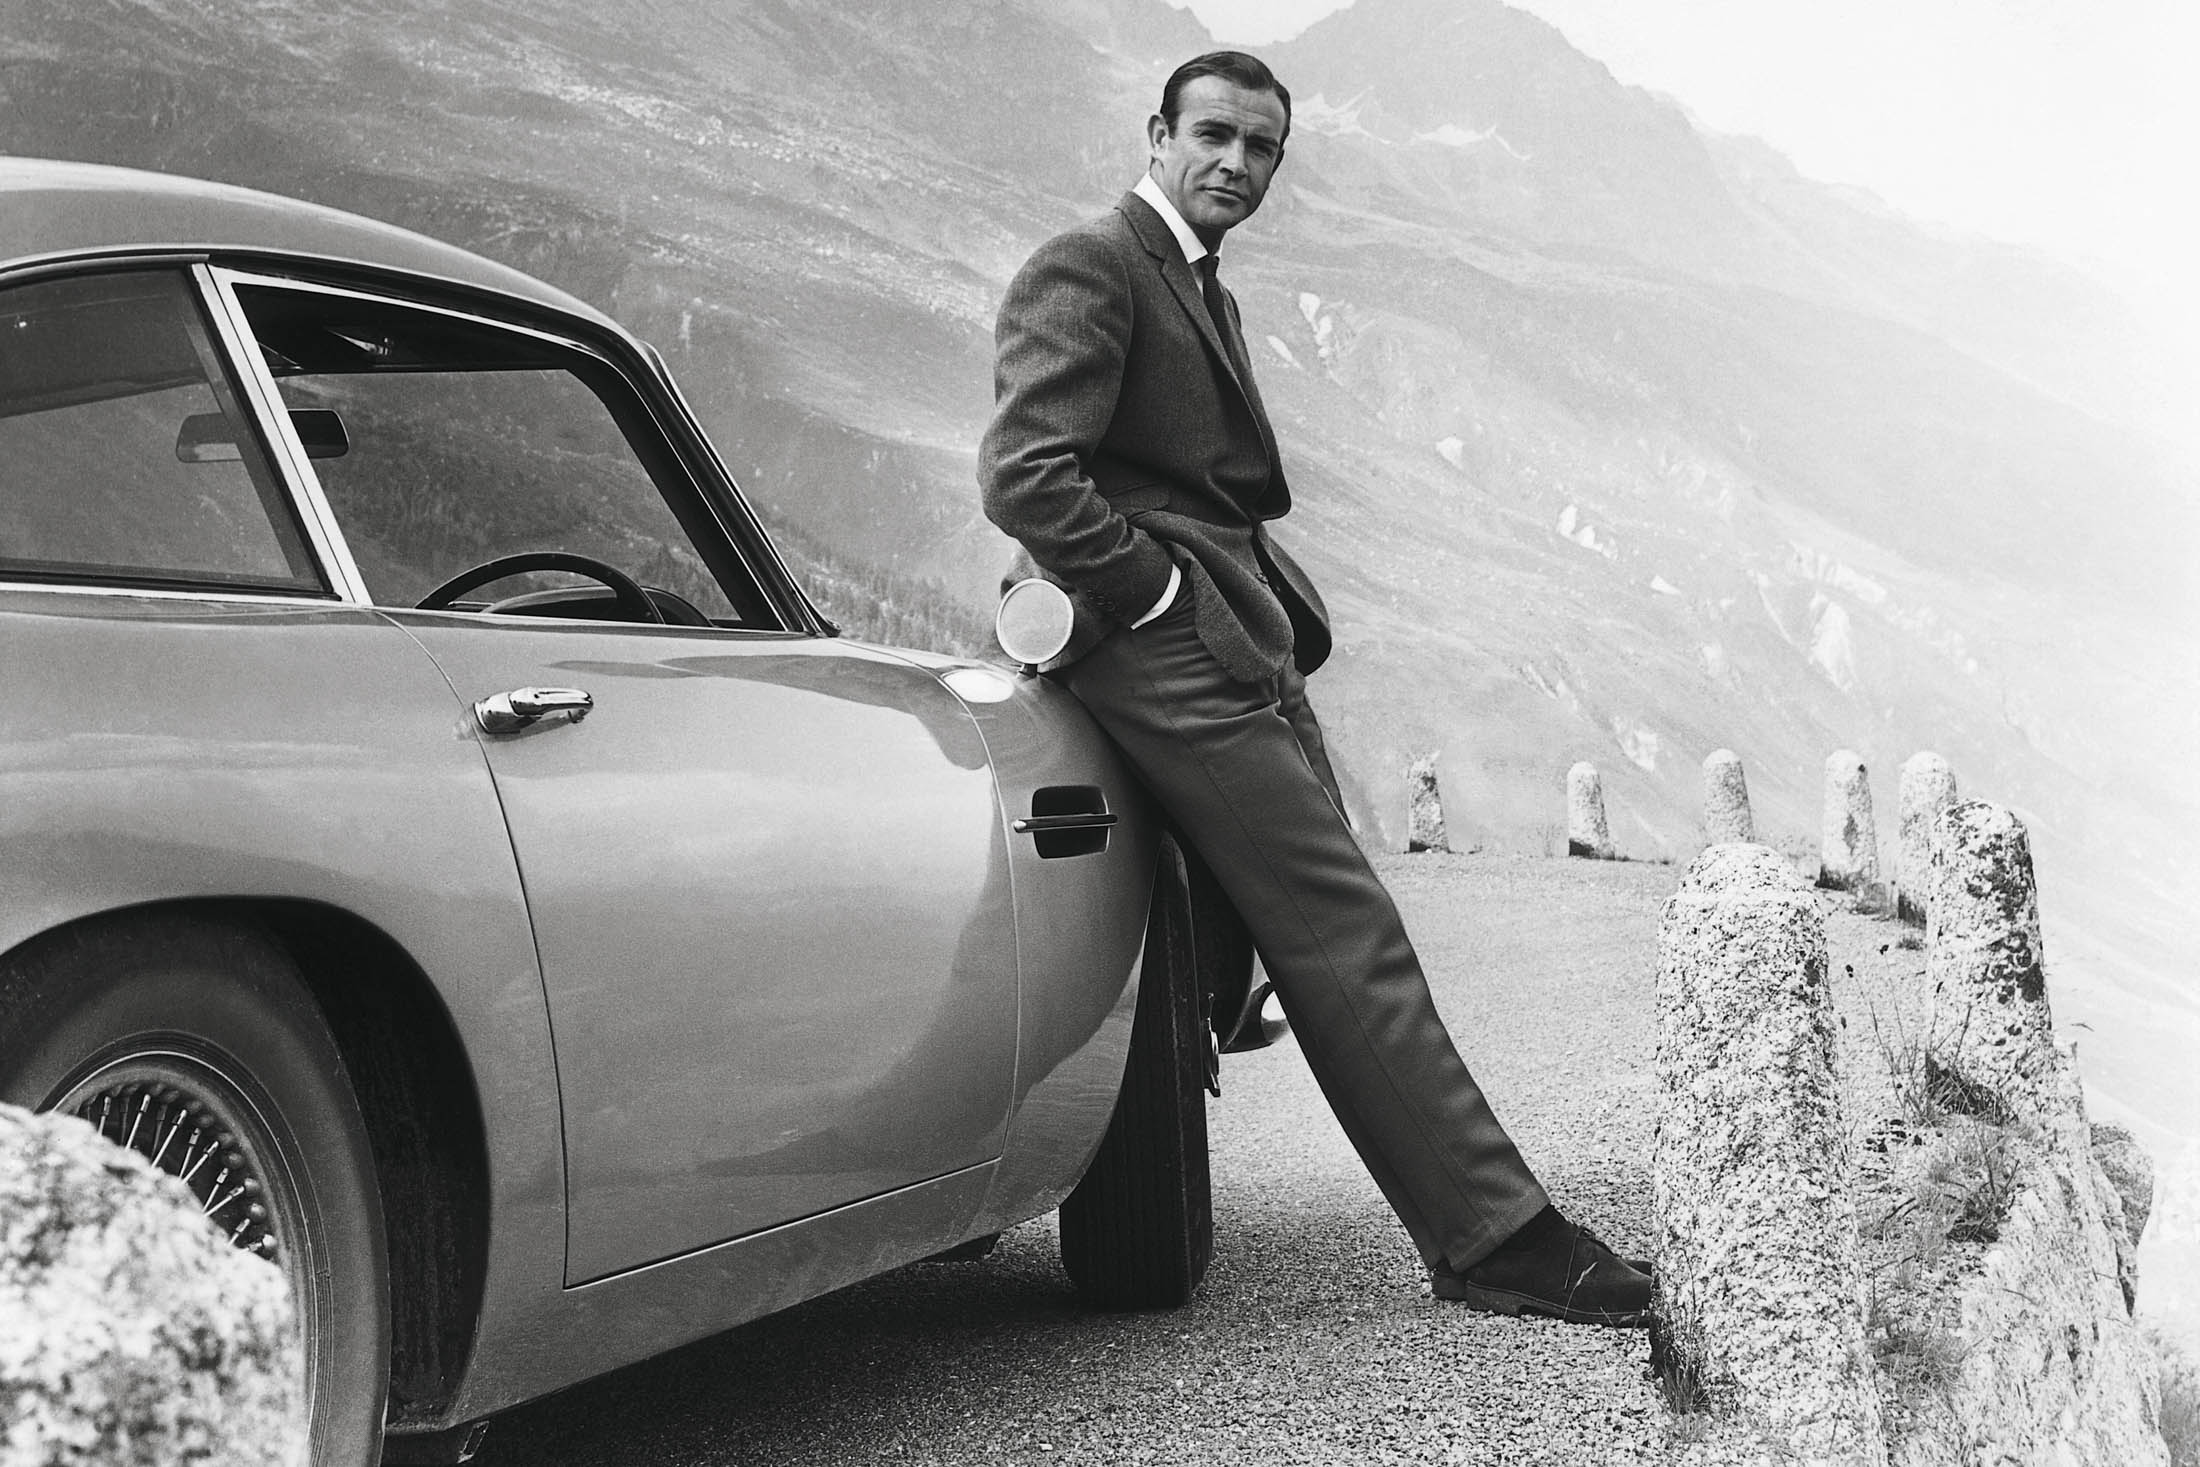 Sean Connery as James Bond, with an Aston Martin DB5.